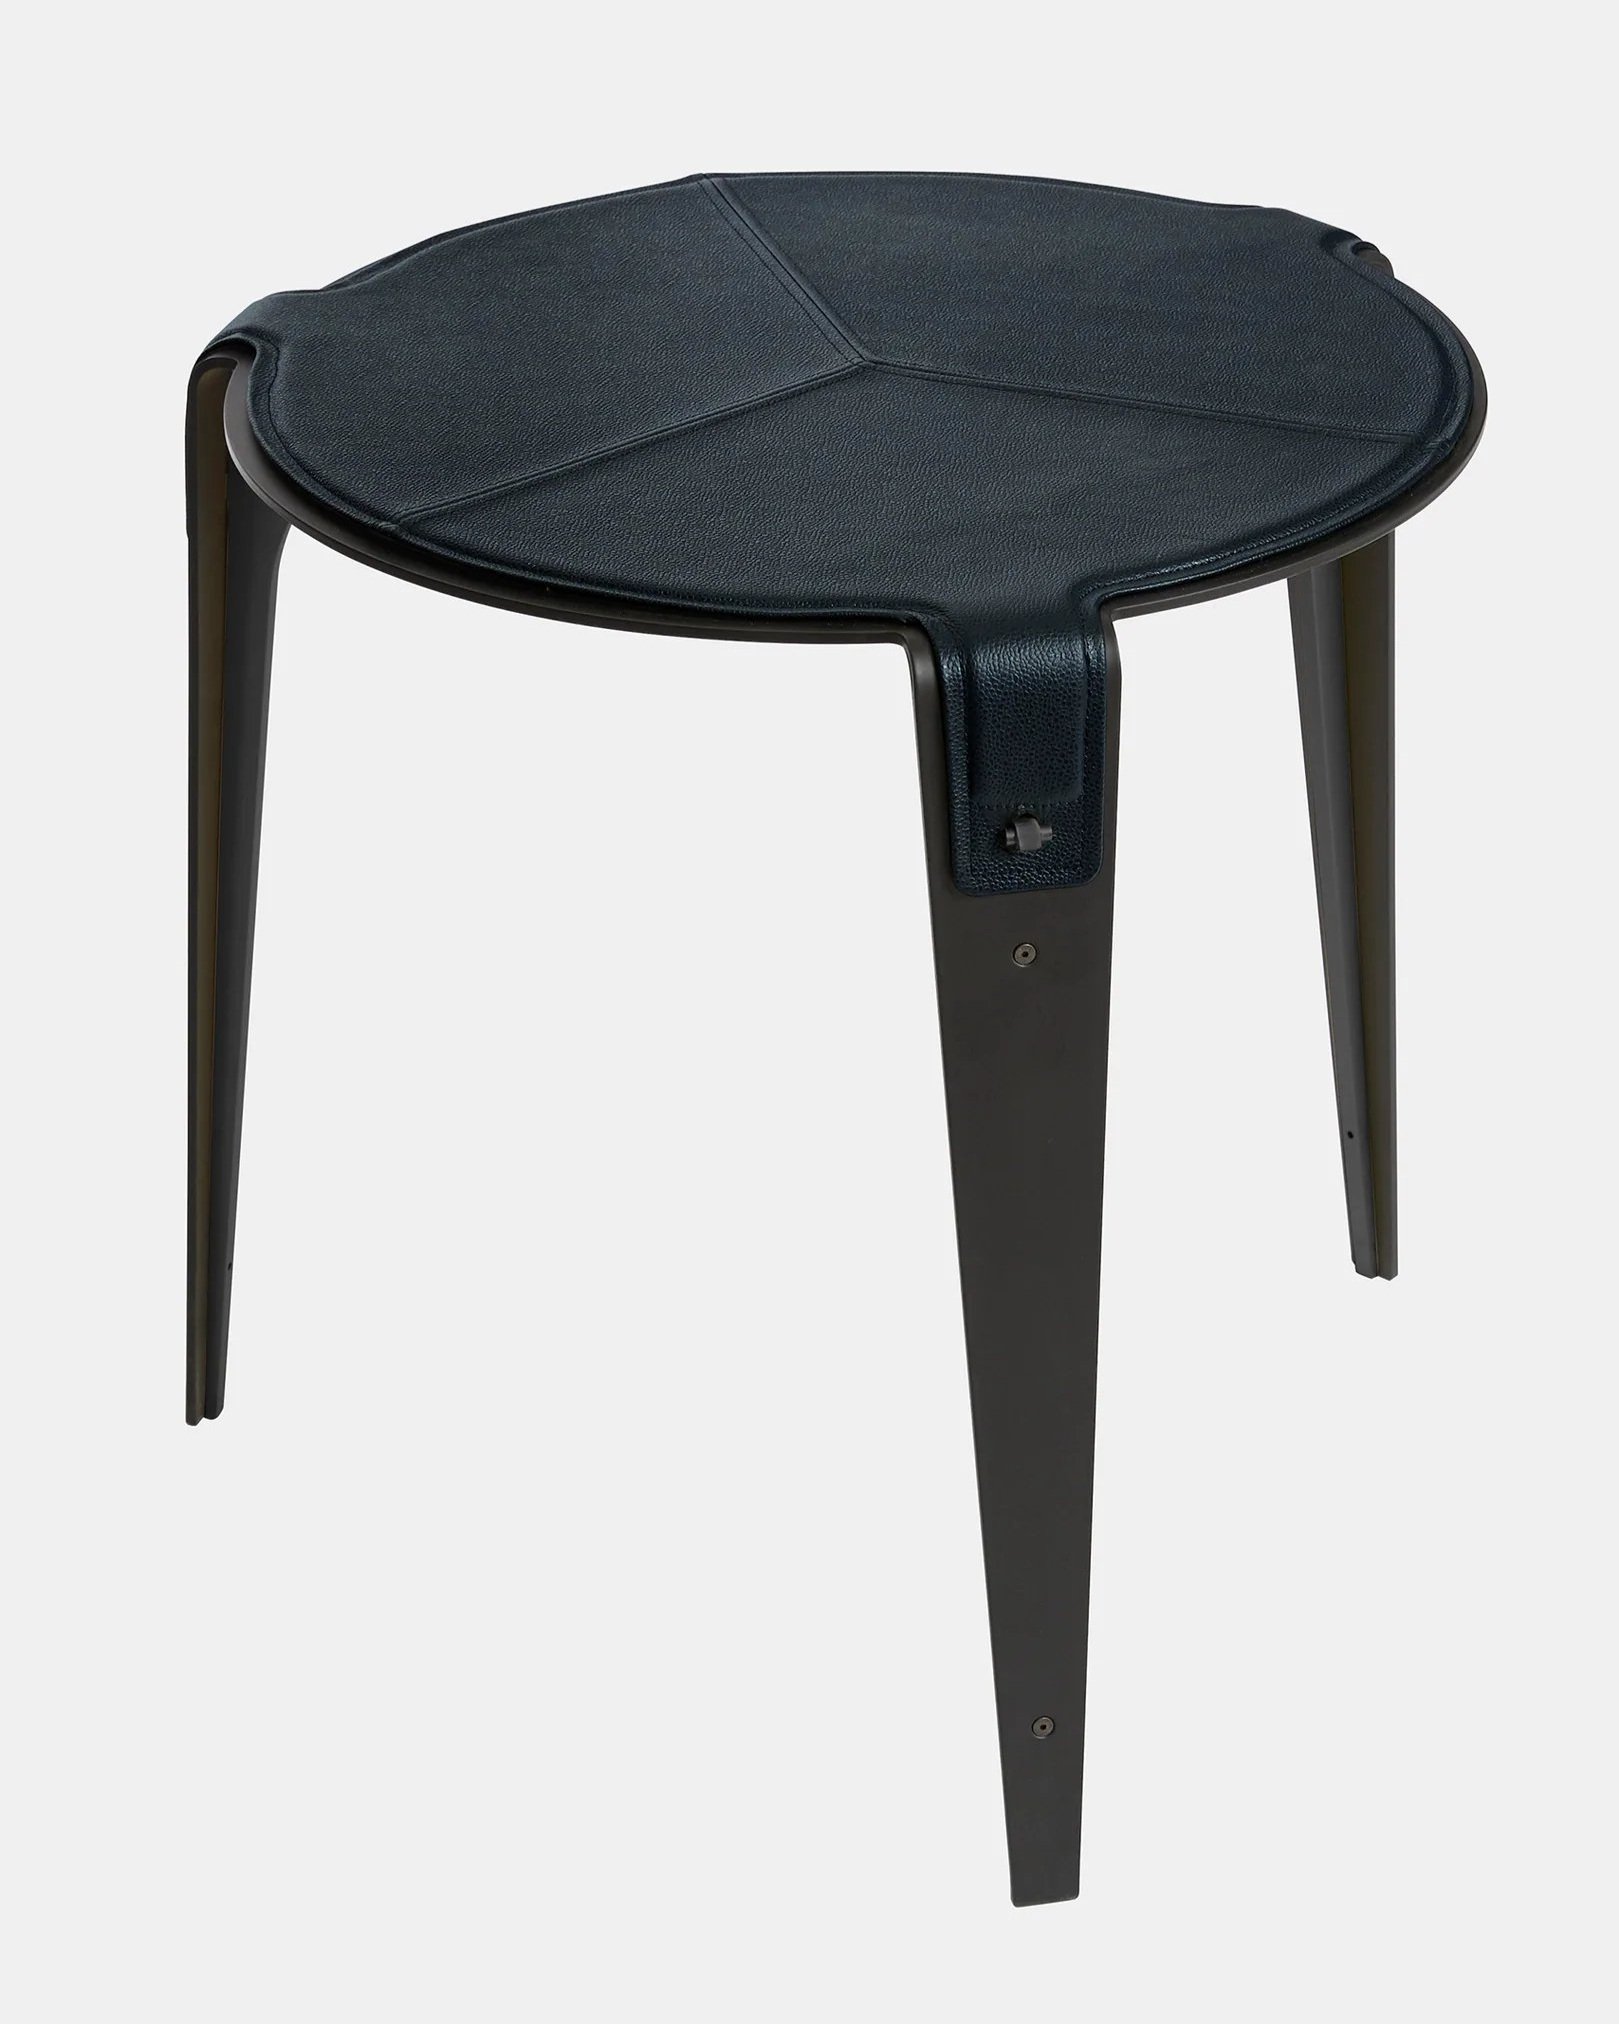 BARDOT SIDE TABLE - BLACK STEEL + NAVY BLUE